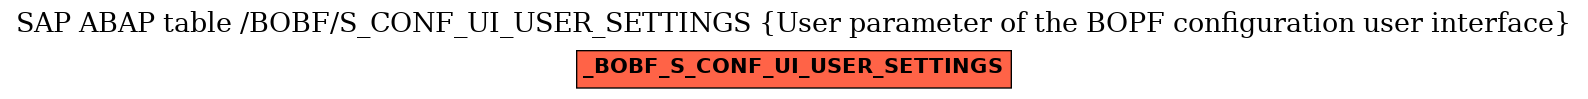 E-R Diagram for table /BOBF/S_CONF_UI_USER_SETTINGS (User parameter of the BOPF configuration user interface)